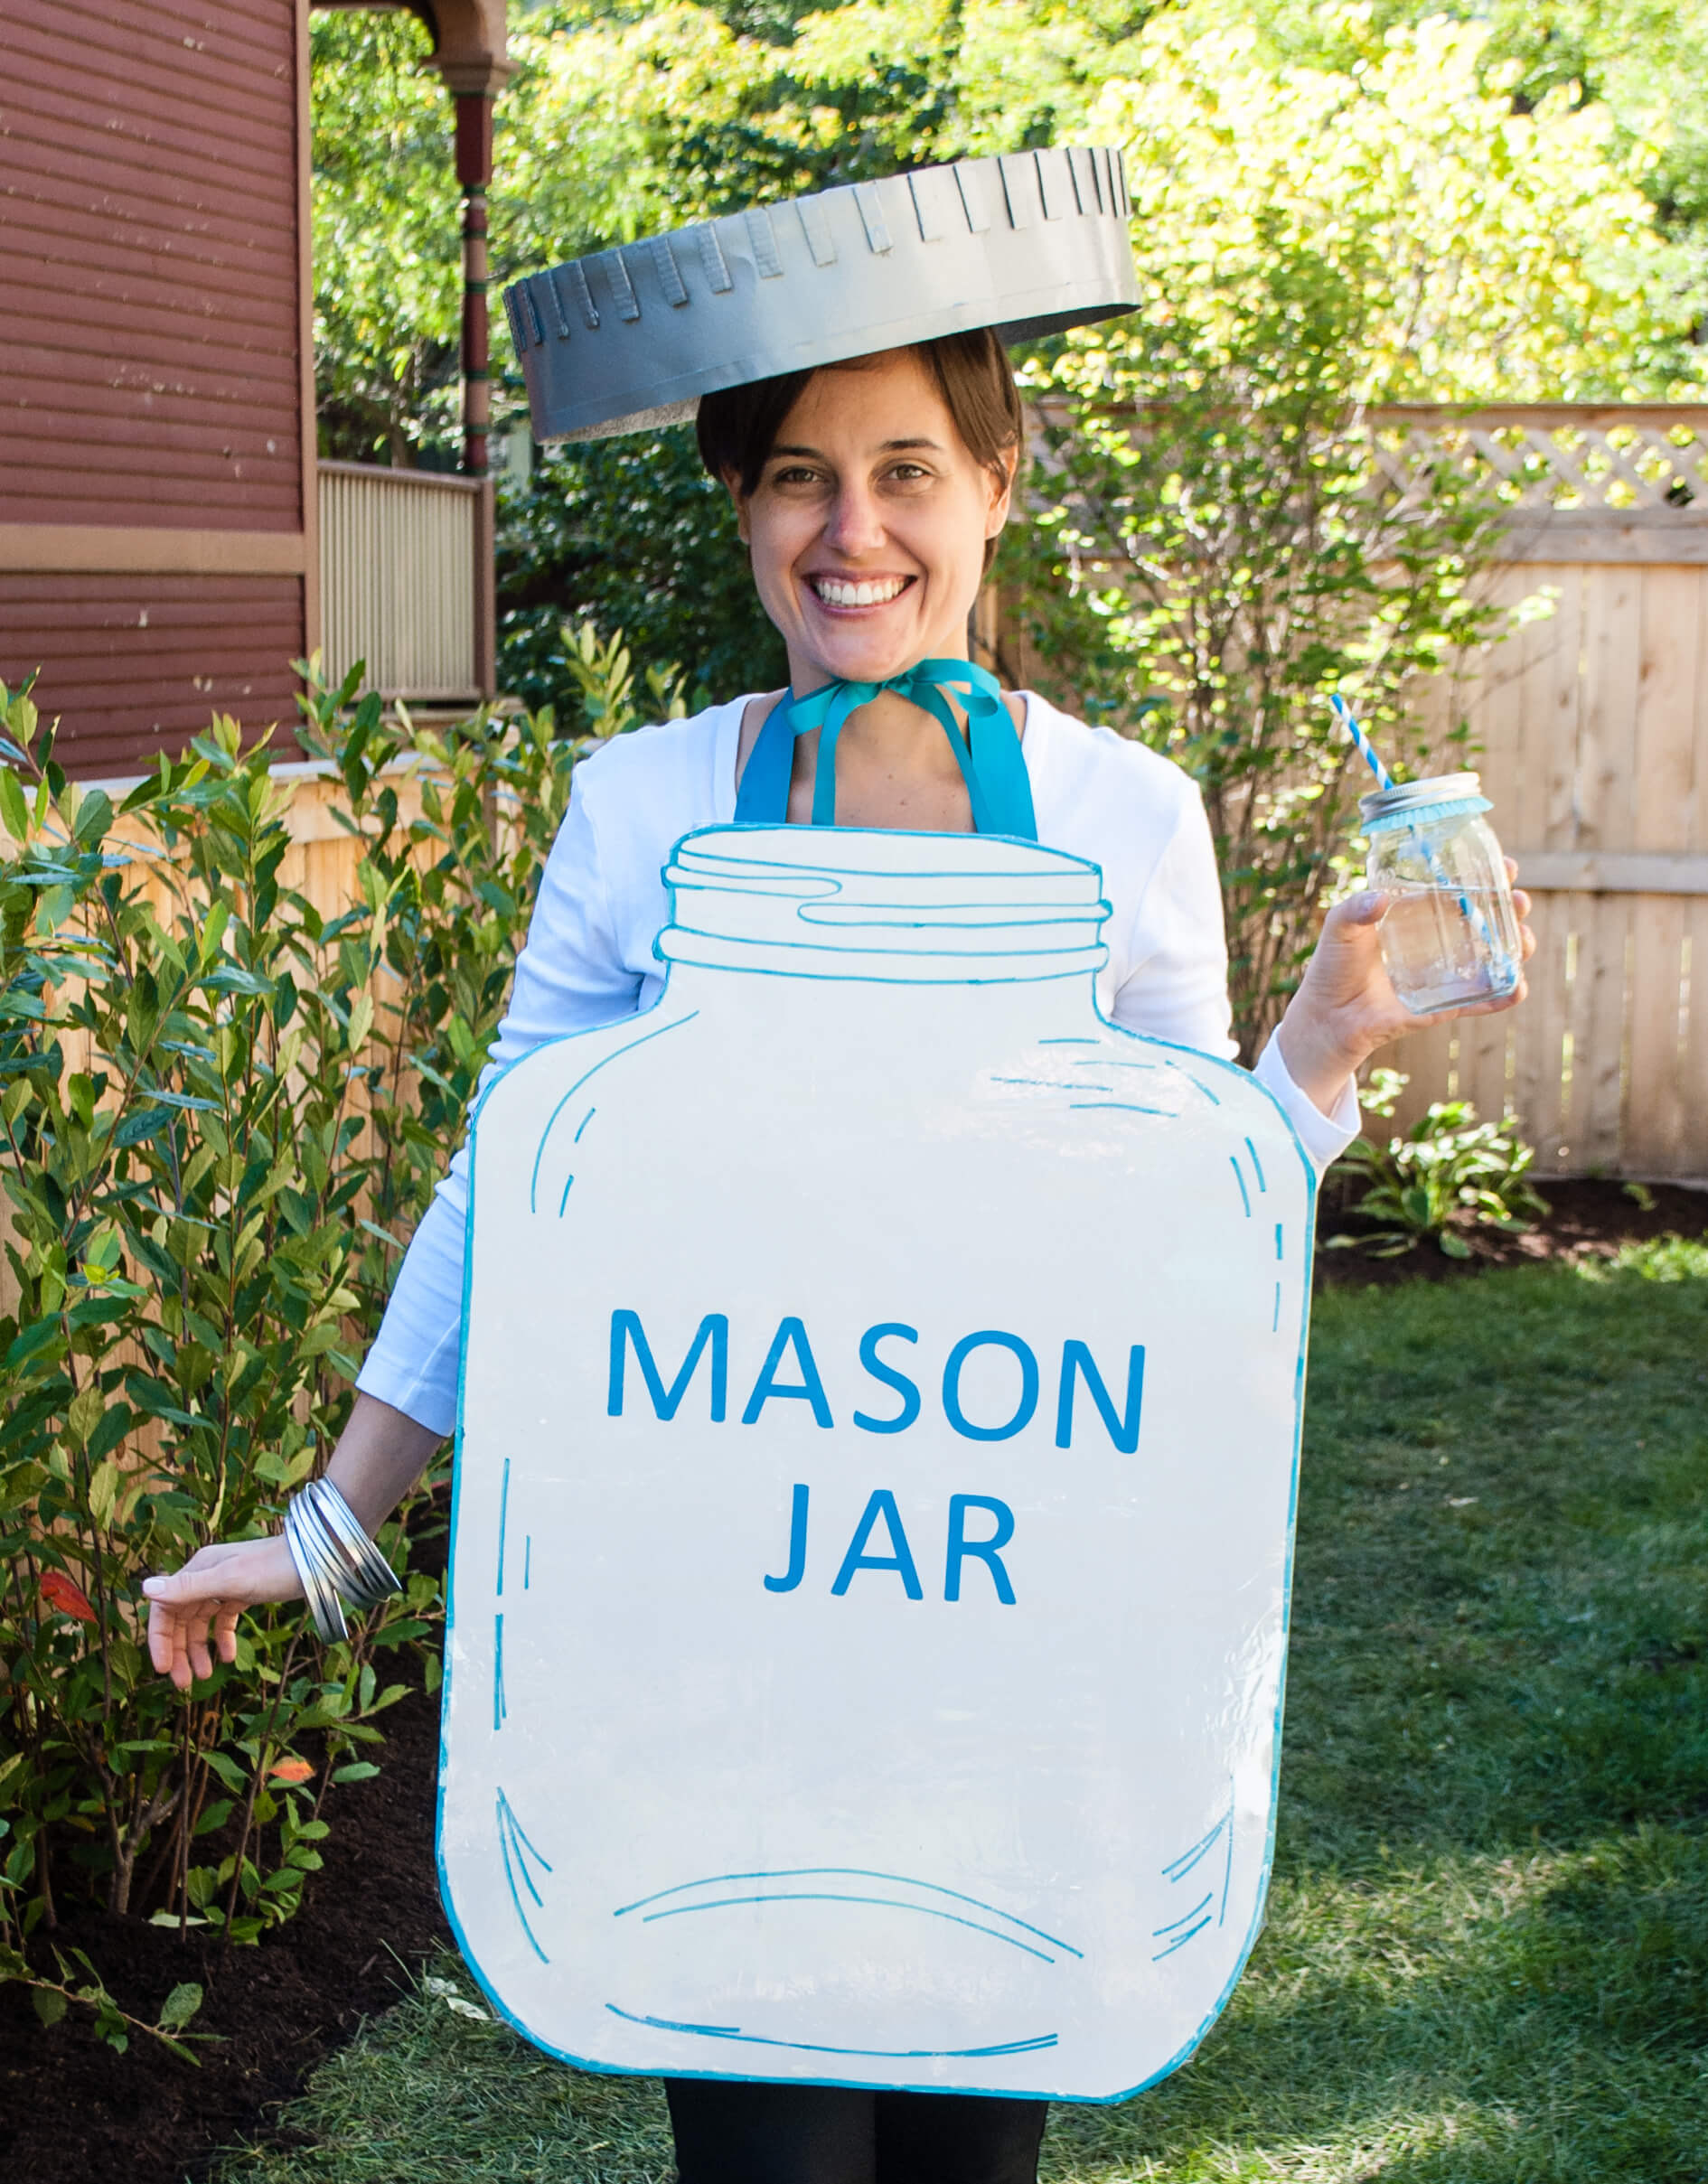 DIY Halloween Costume Ideas For Adults
 Mason Jar Halloween Costume Easy DIY Halloween Costume